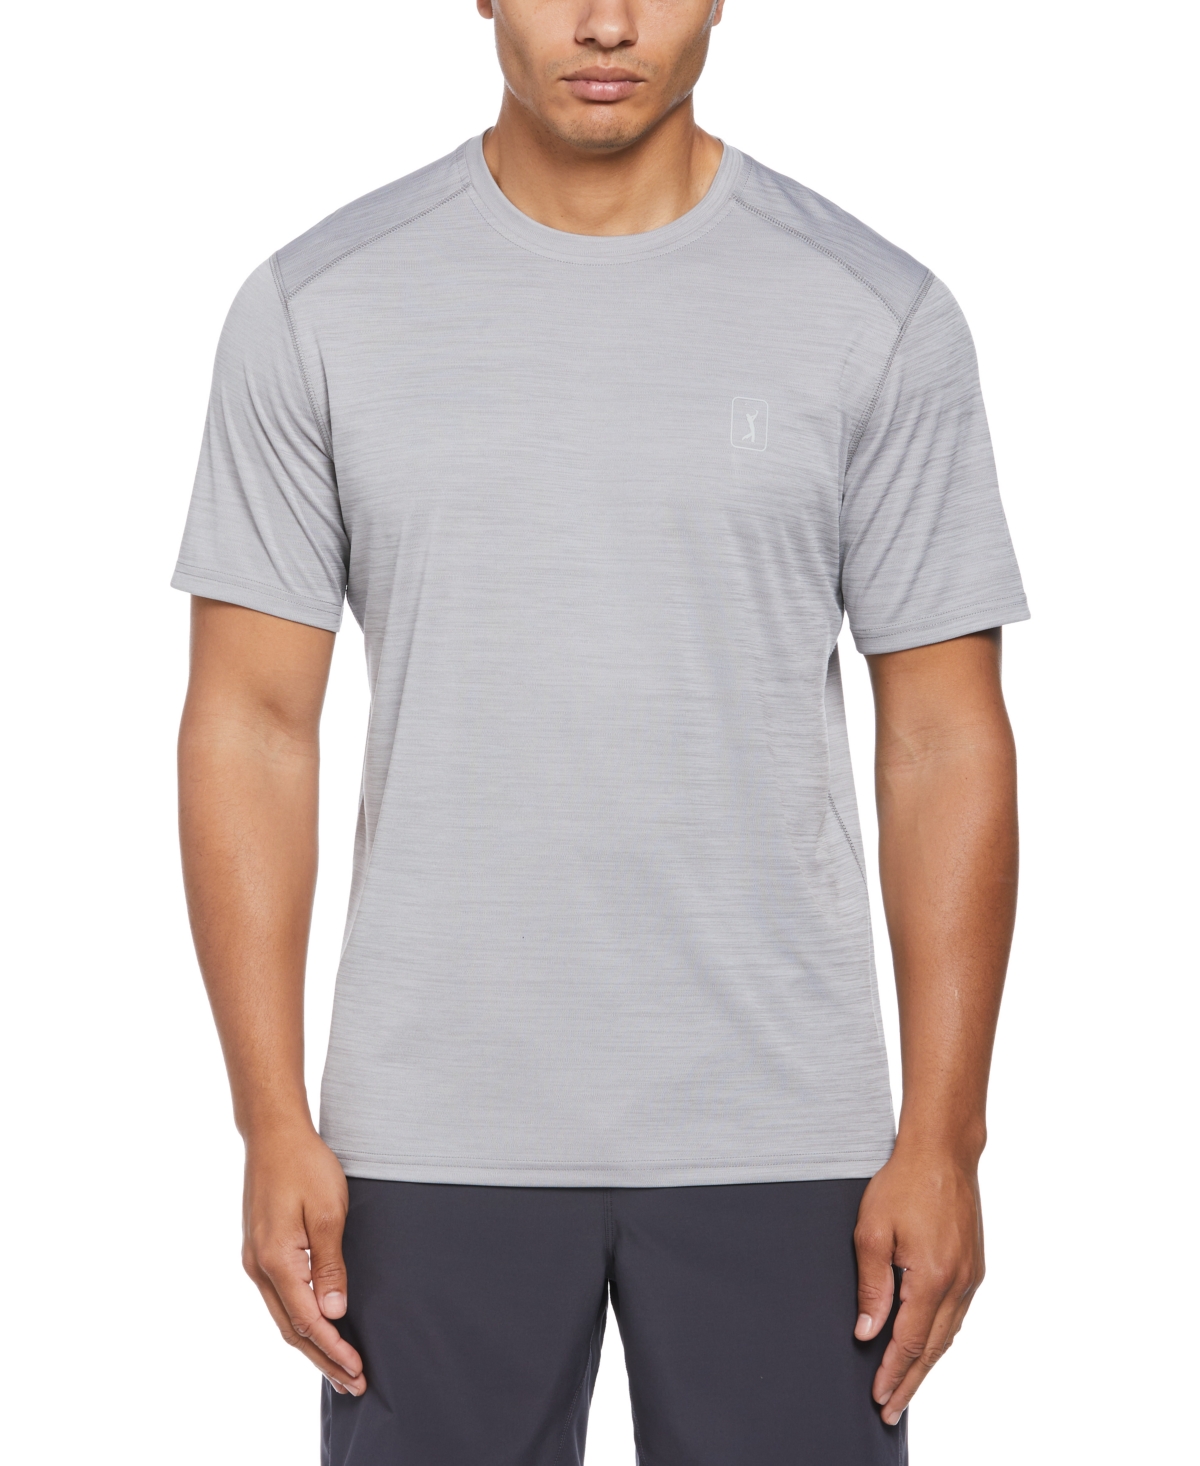 Men's Performance Golf T-Shirt - Light Grey Heather